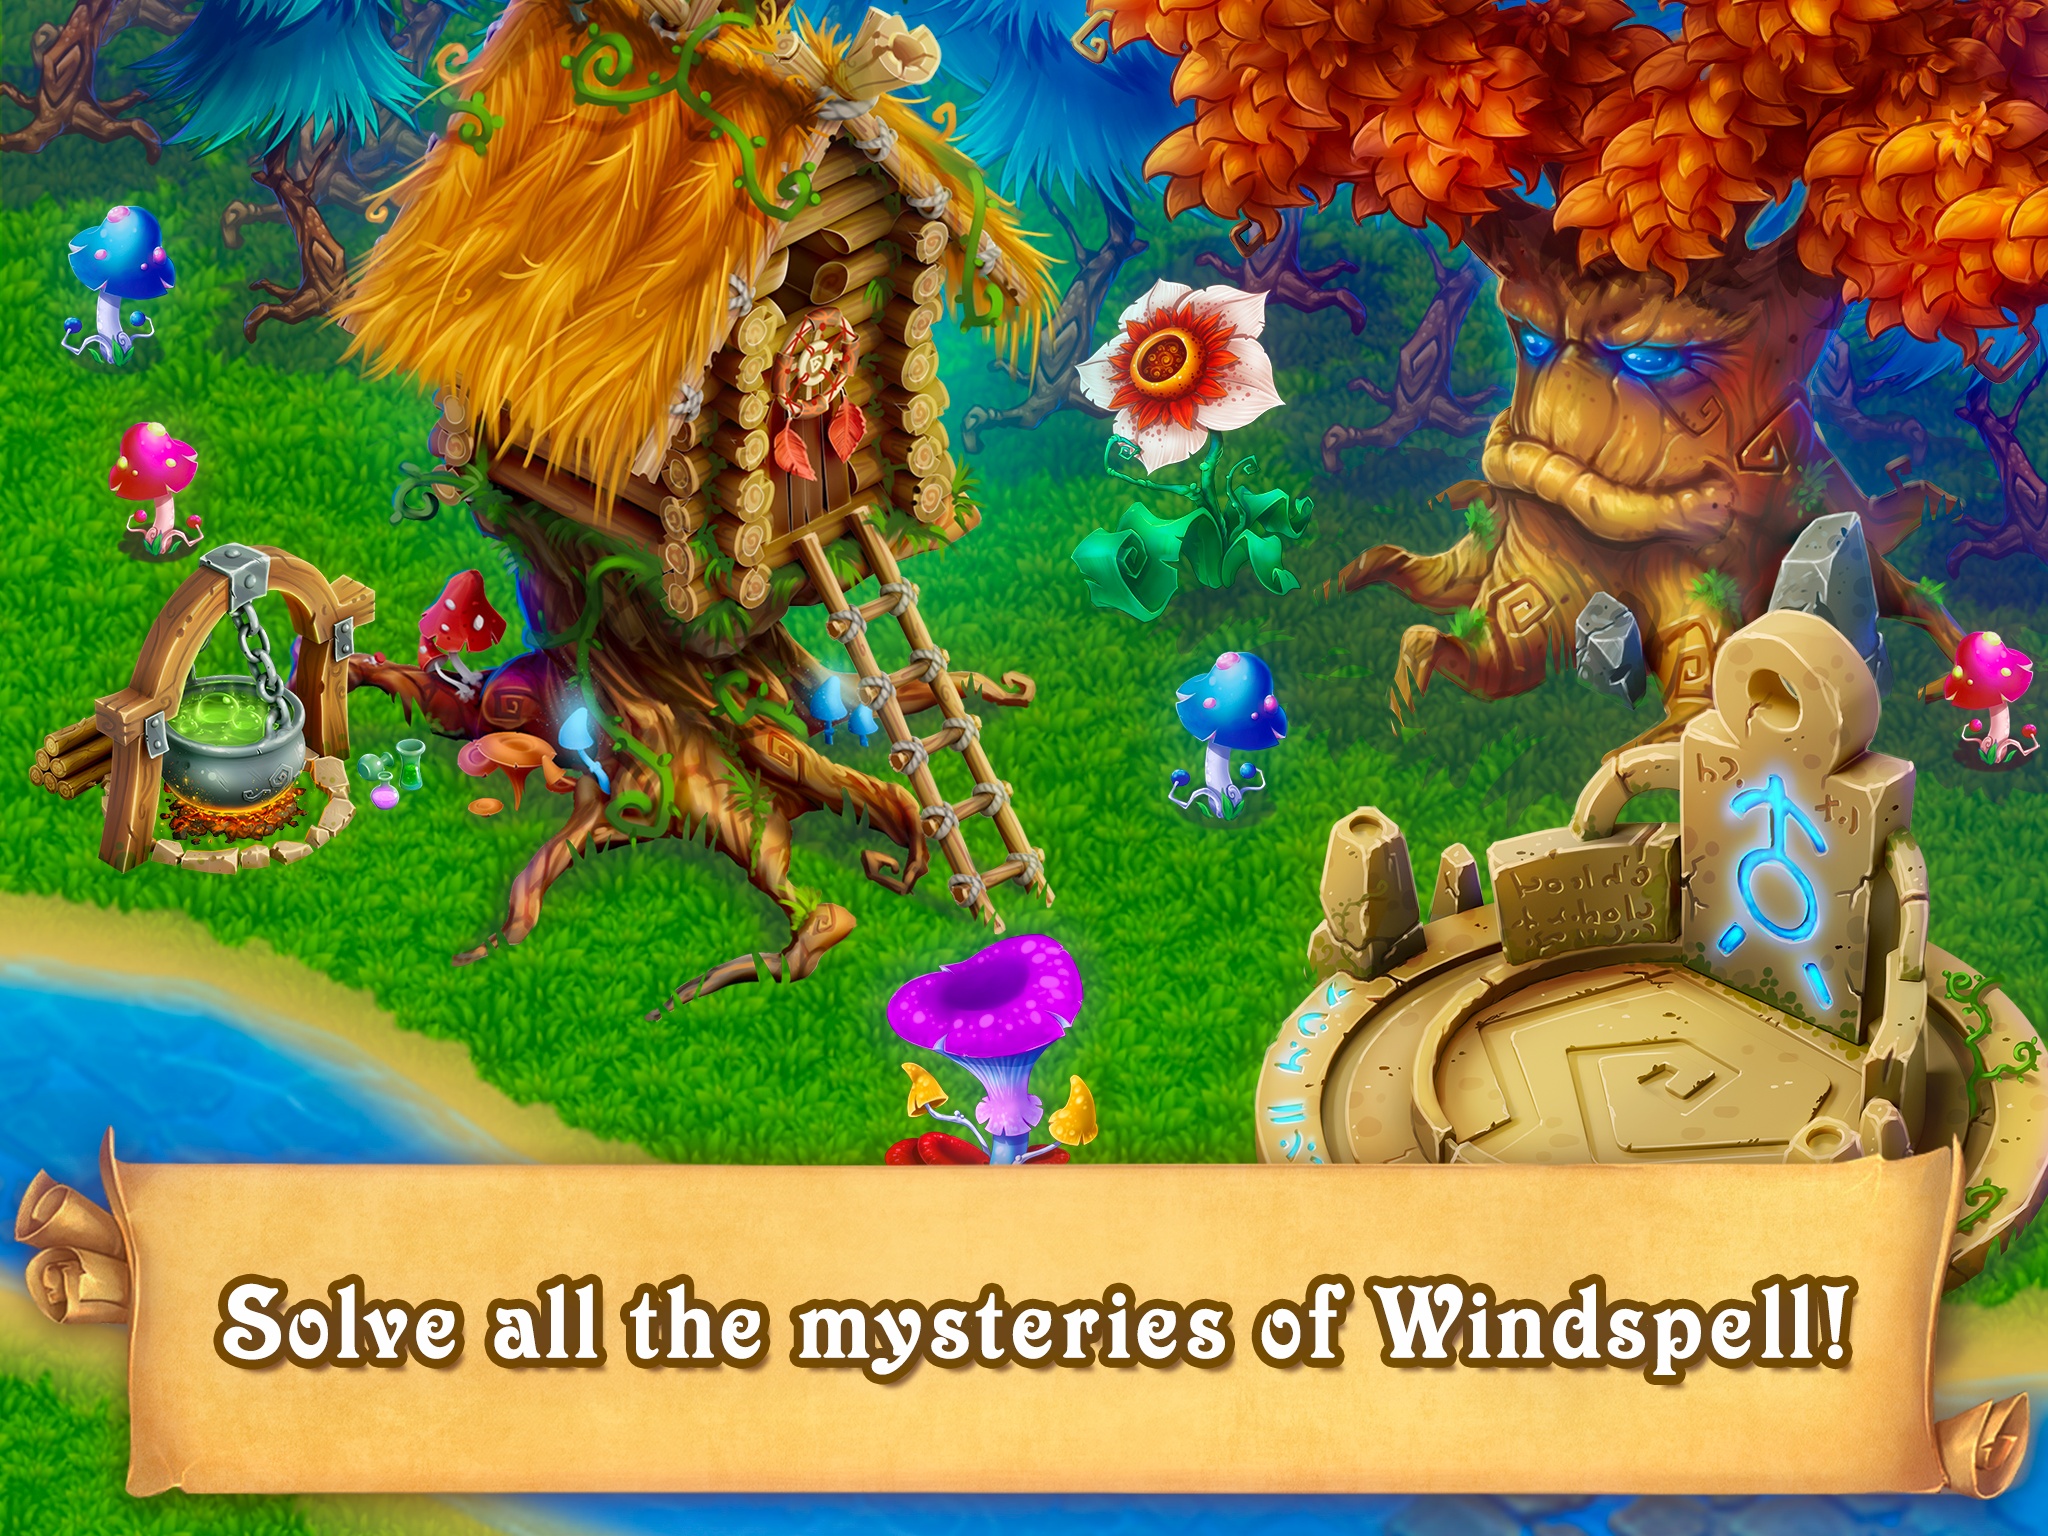 Tales of Windspell screenshot game